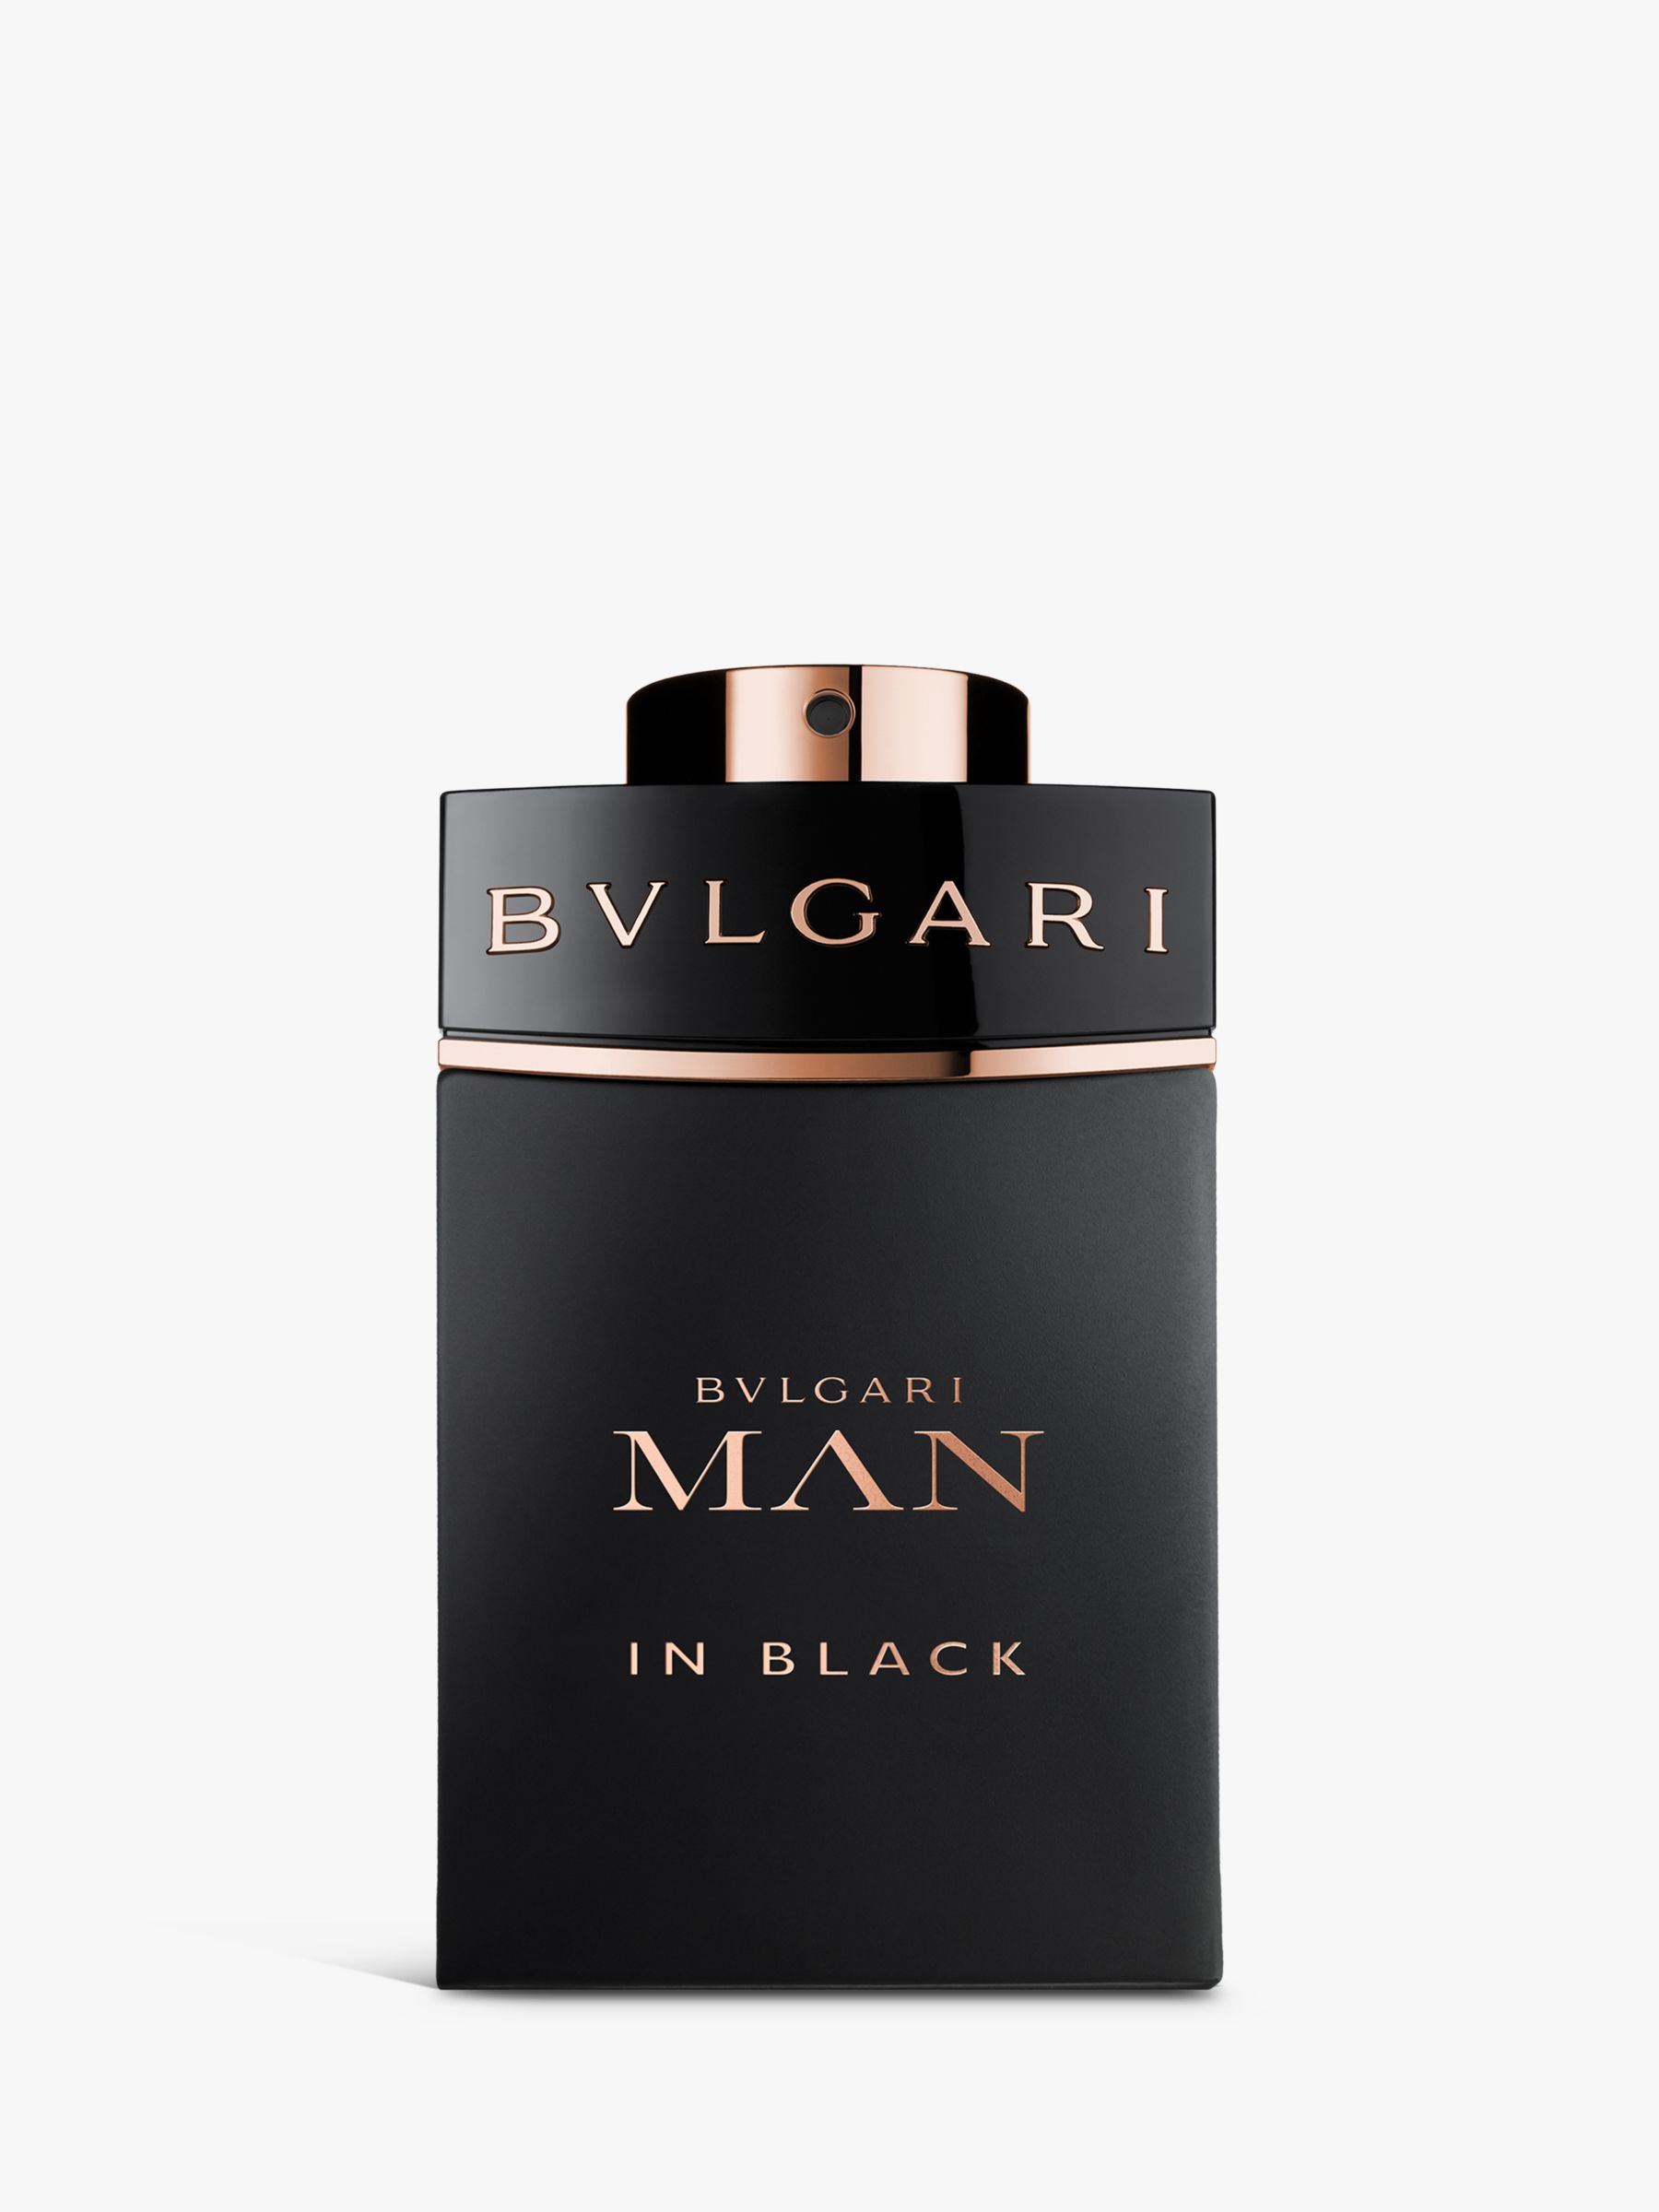 bvlgari man in black debenhams